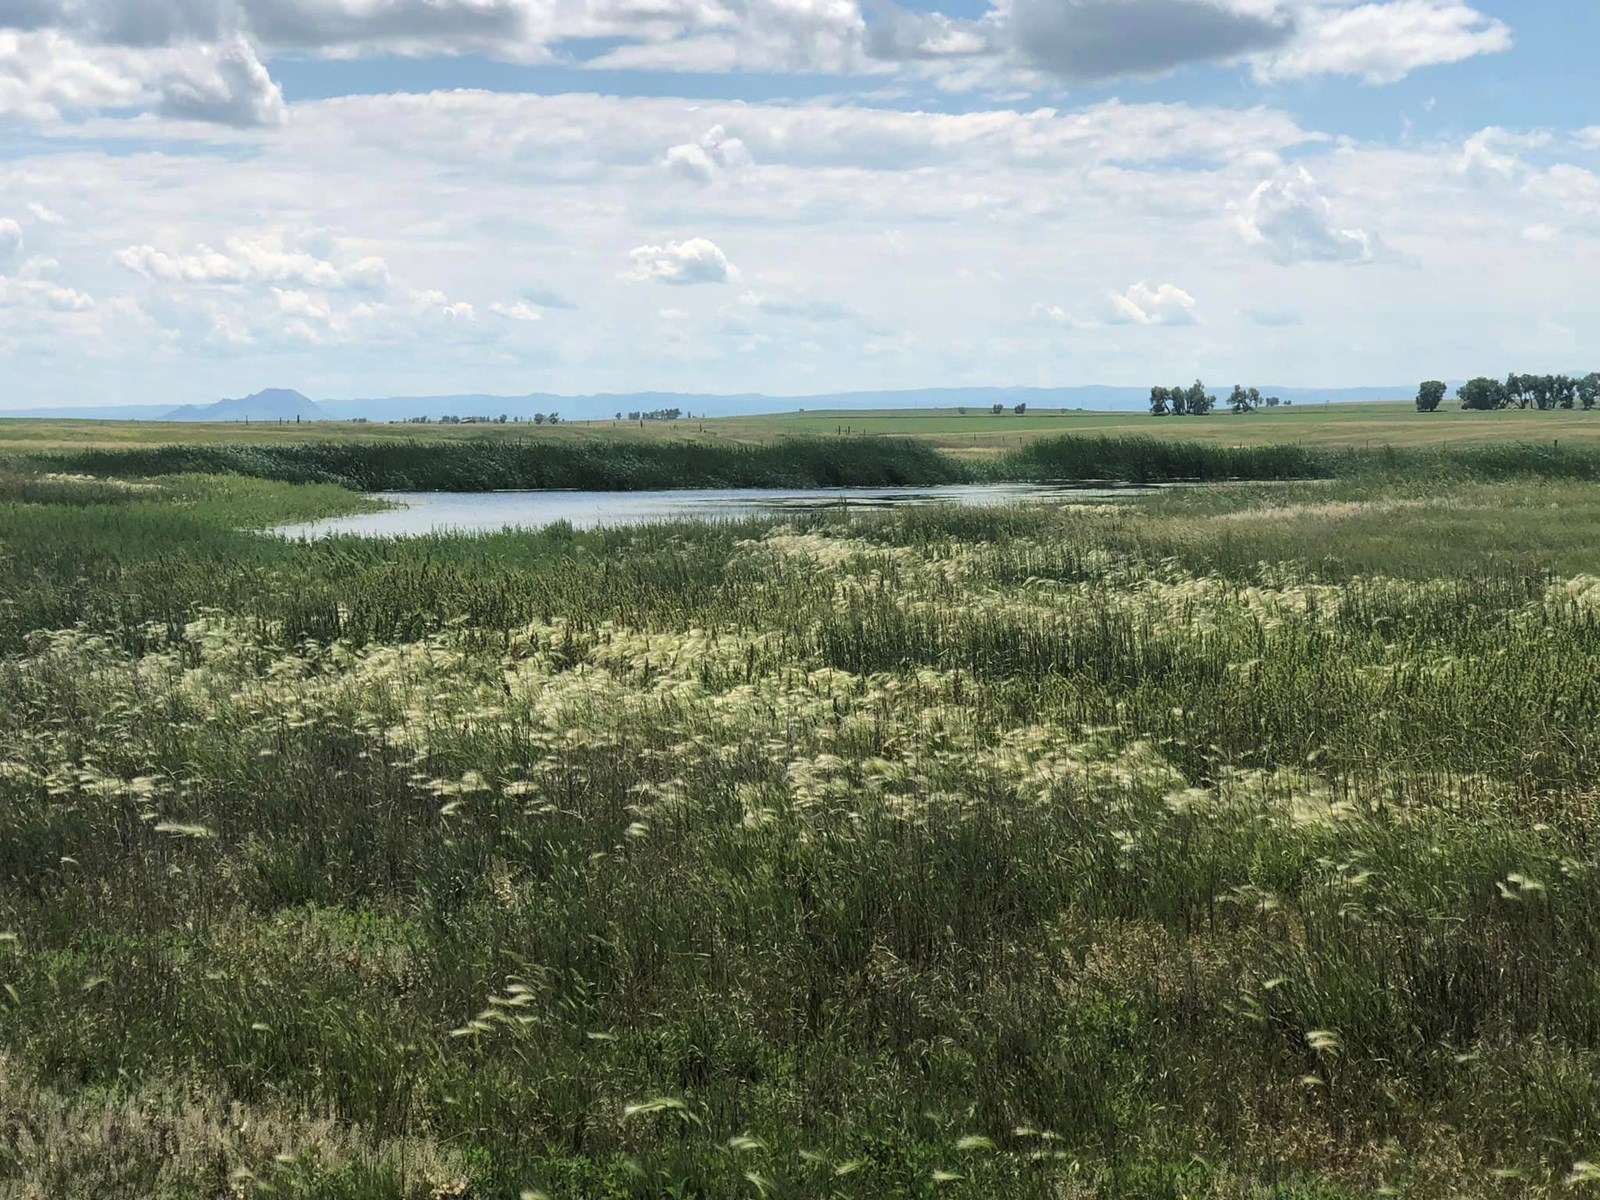 40-Acres of Land near Newell, South Dakota for Sale